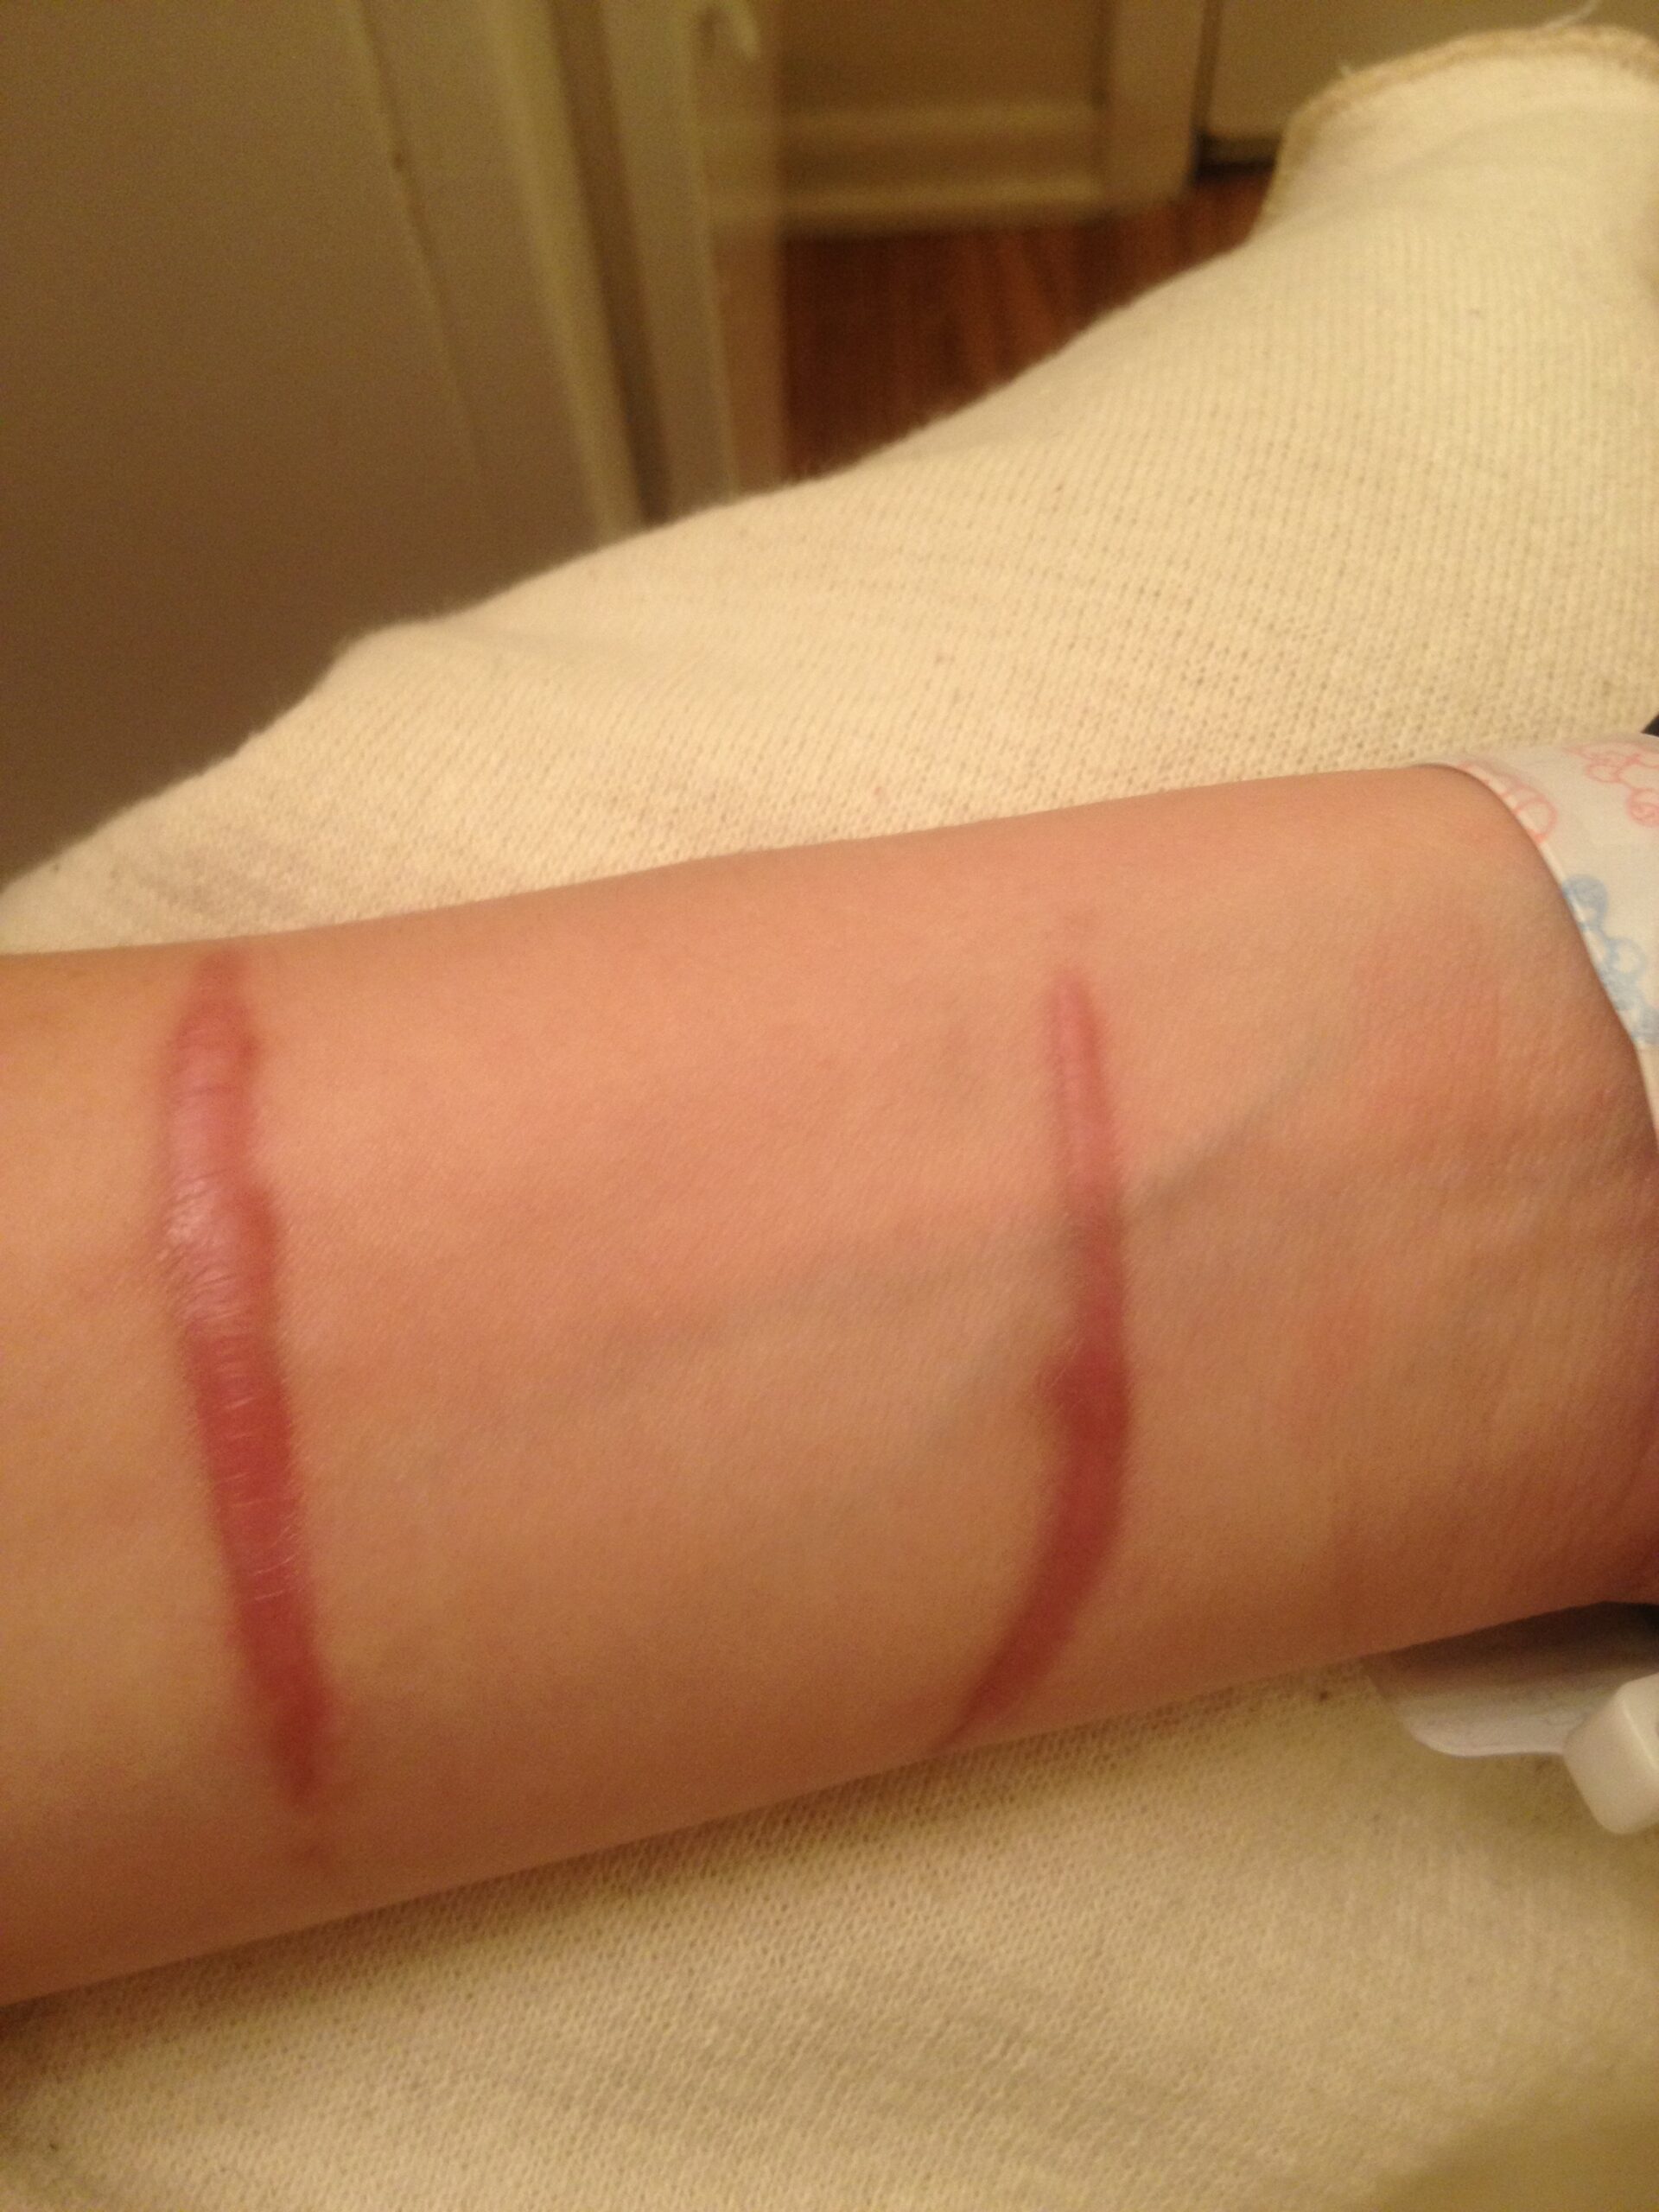 Hypertrophic scar (4 months after incident)